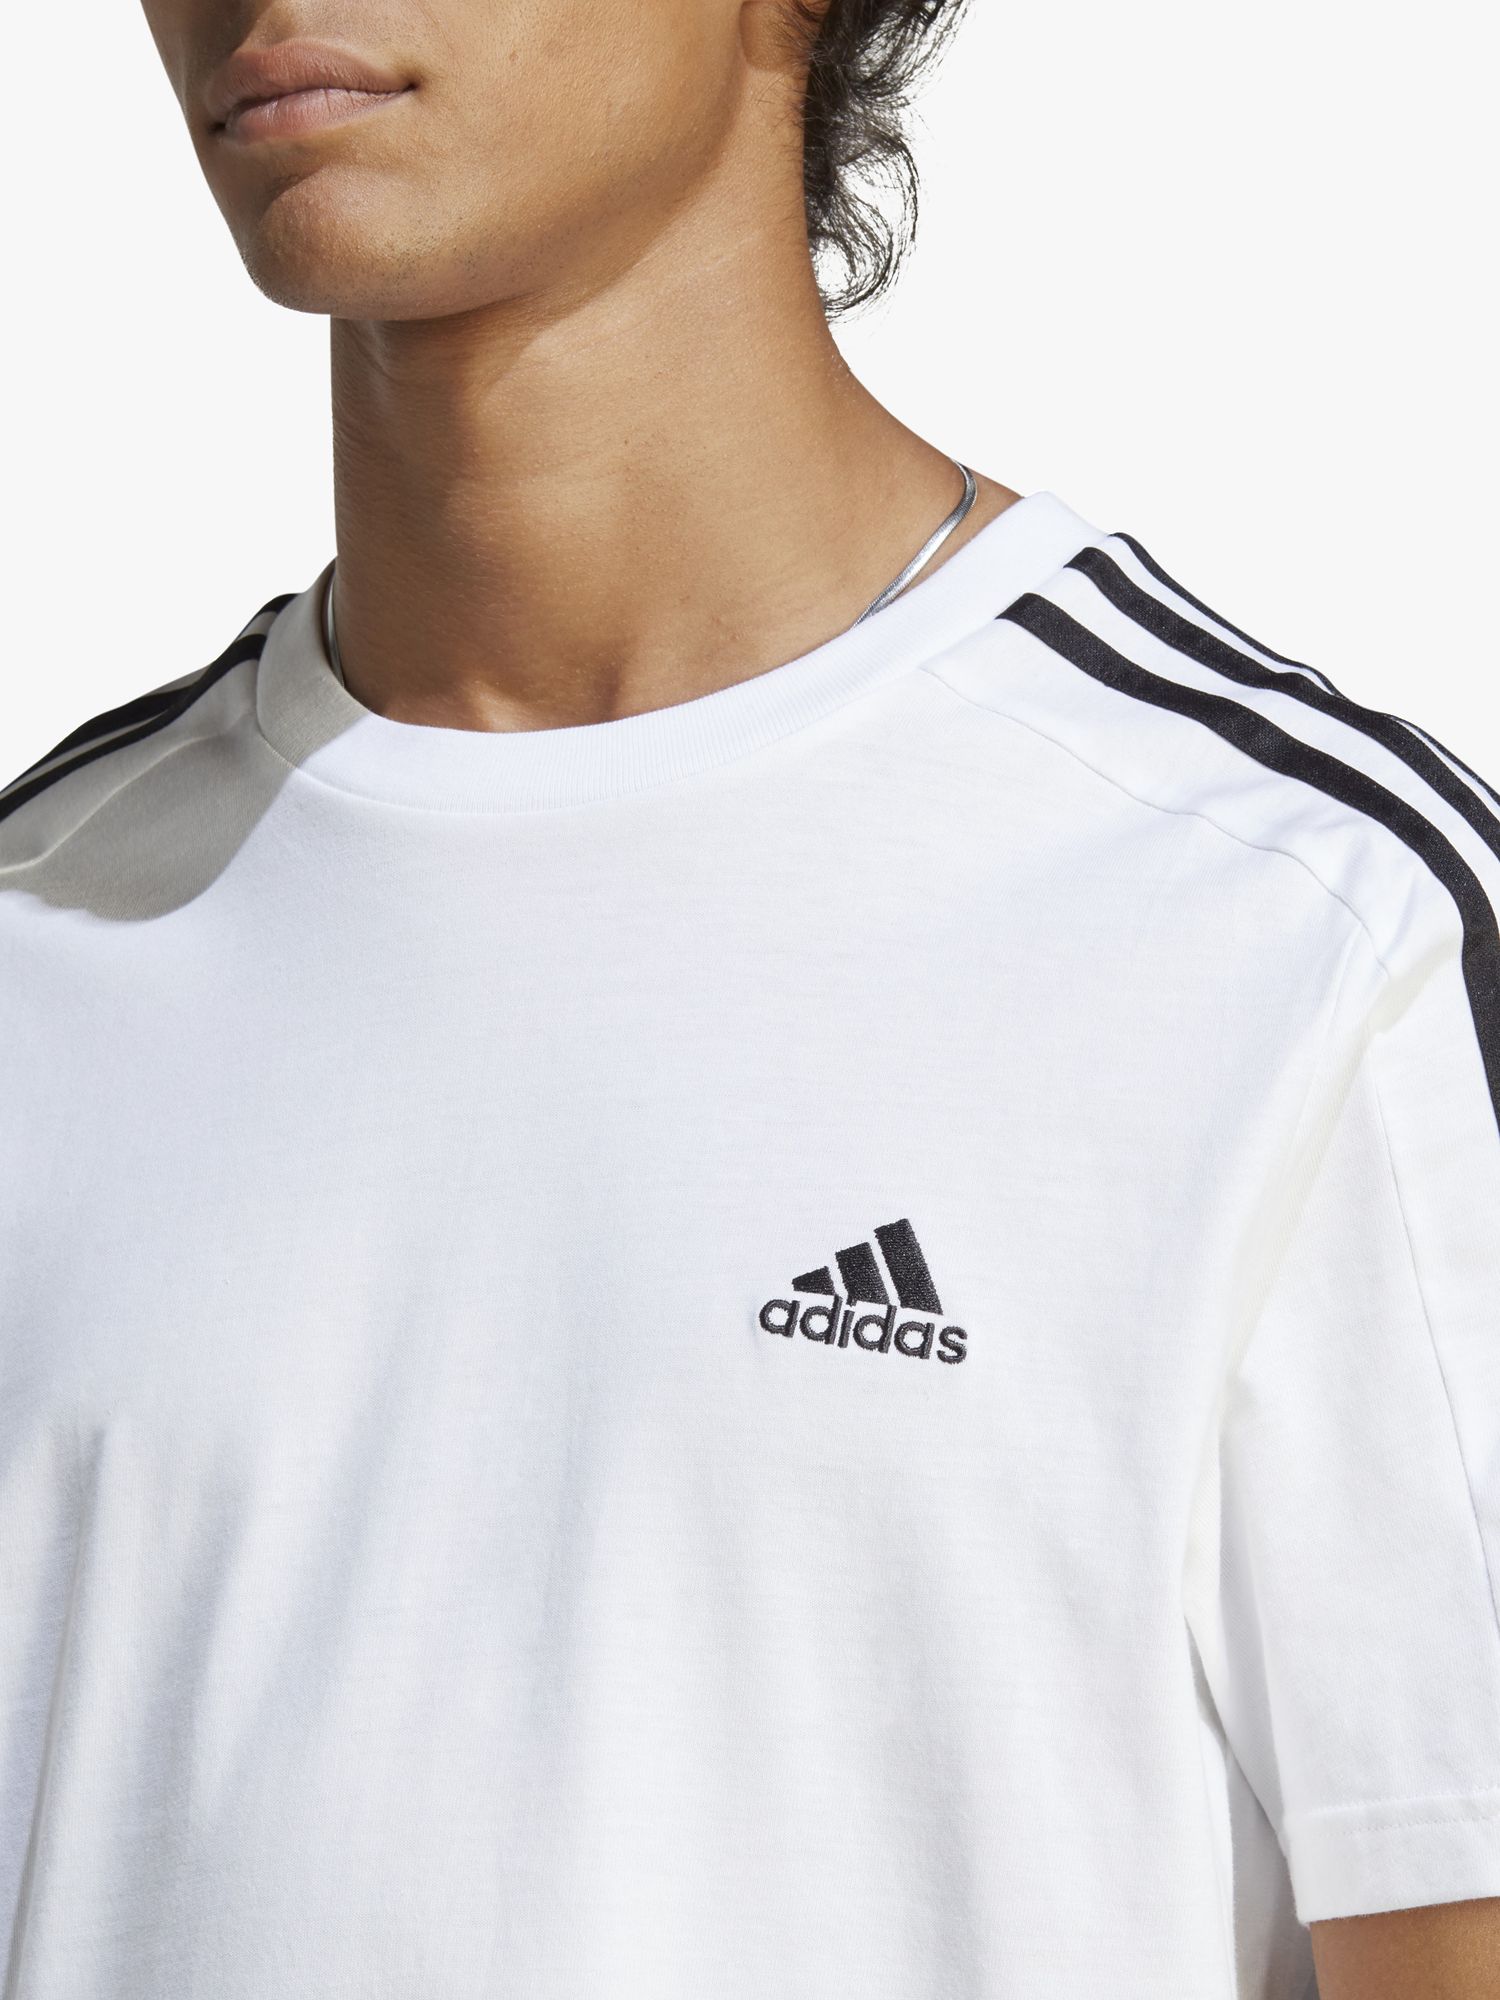 adidas Essentials 3-Stripes T-Shirt, White/Black, S